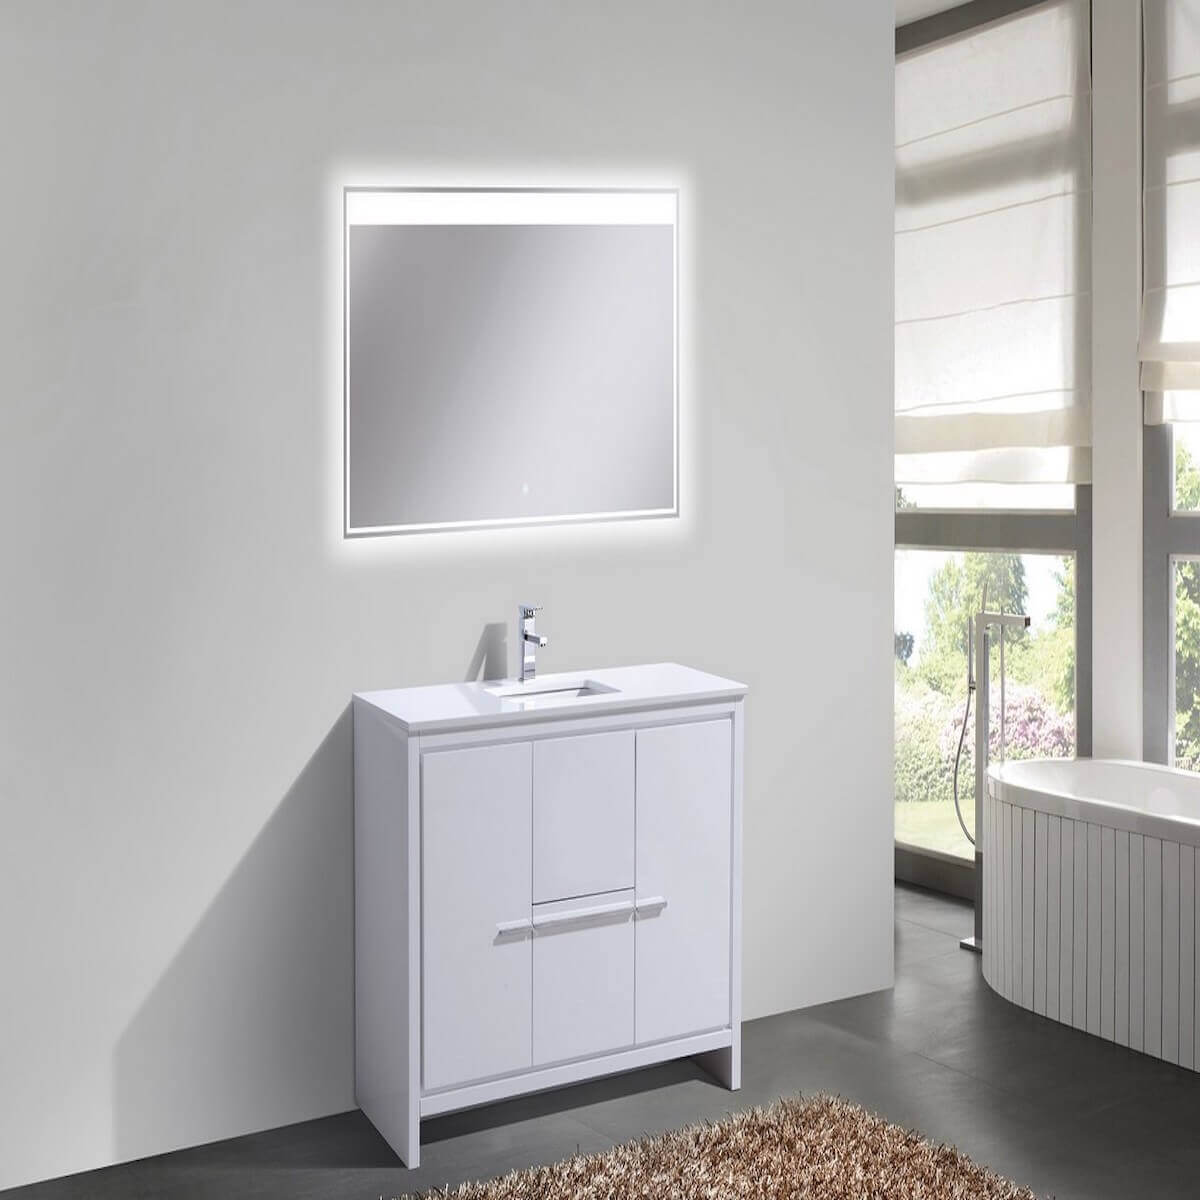 KubeBath Dolce 48" Gloss White Freestanding Single Vanity with Quartz Countertop AD648SGW in Bathroom #finish_high gloss white